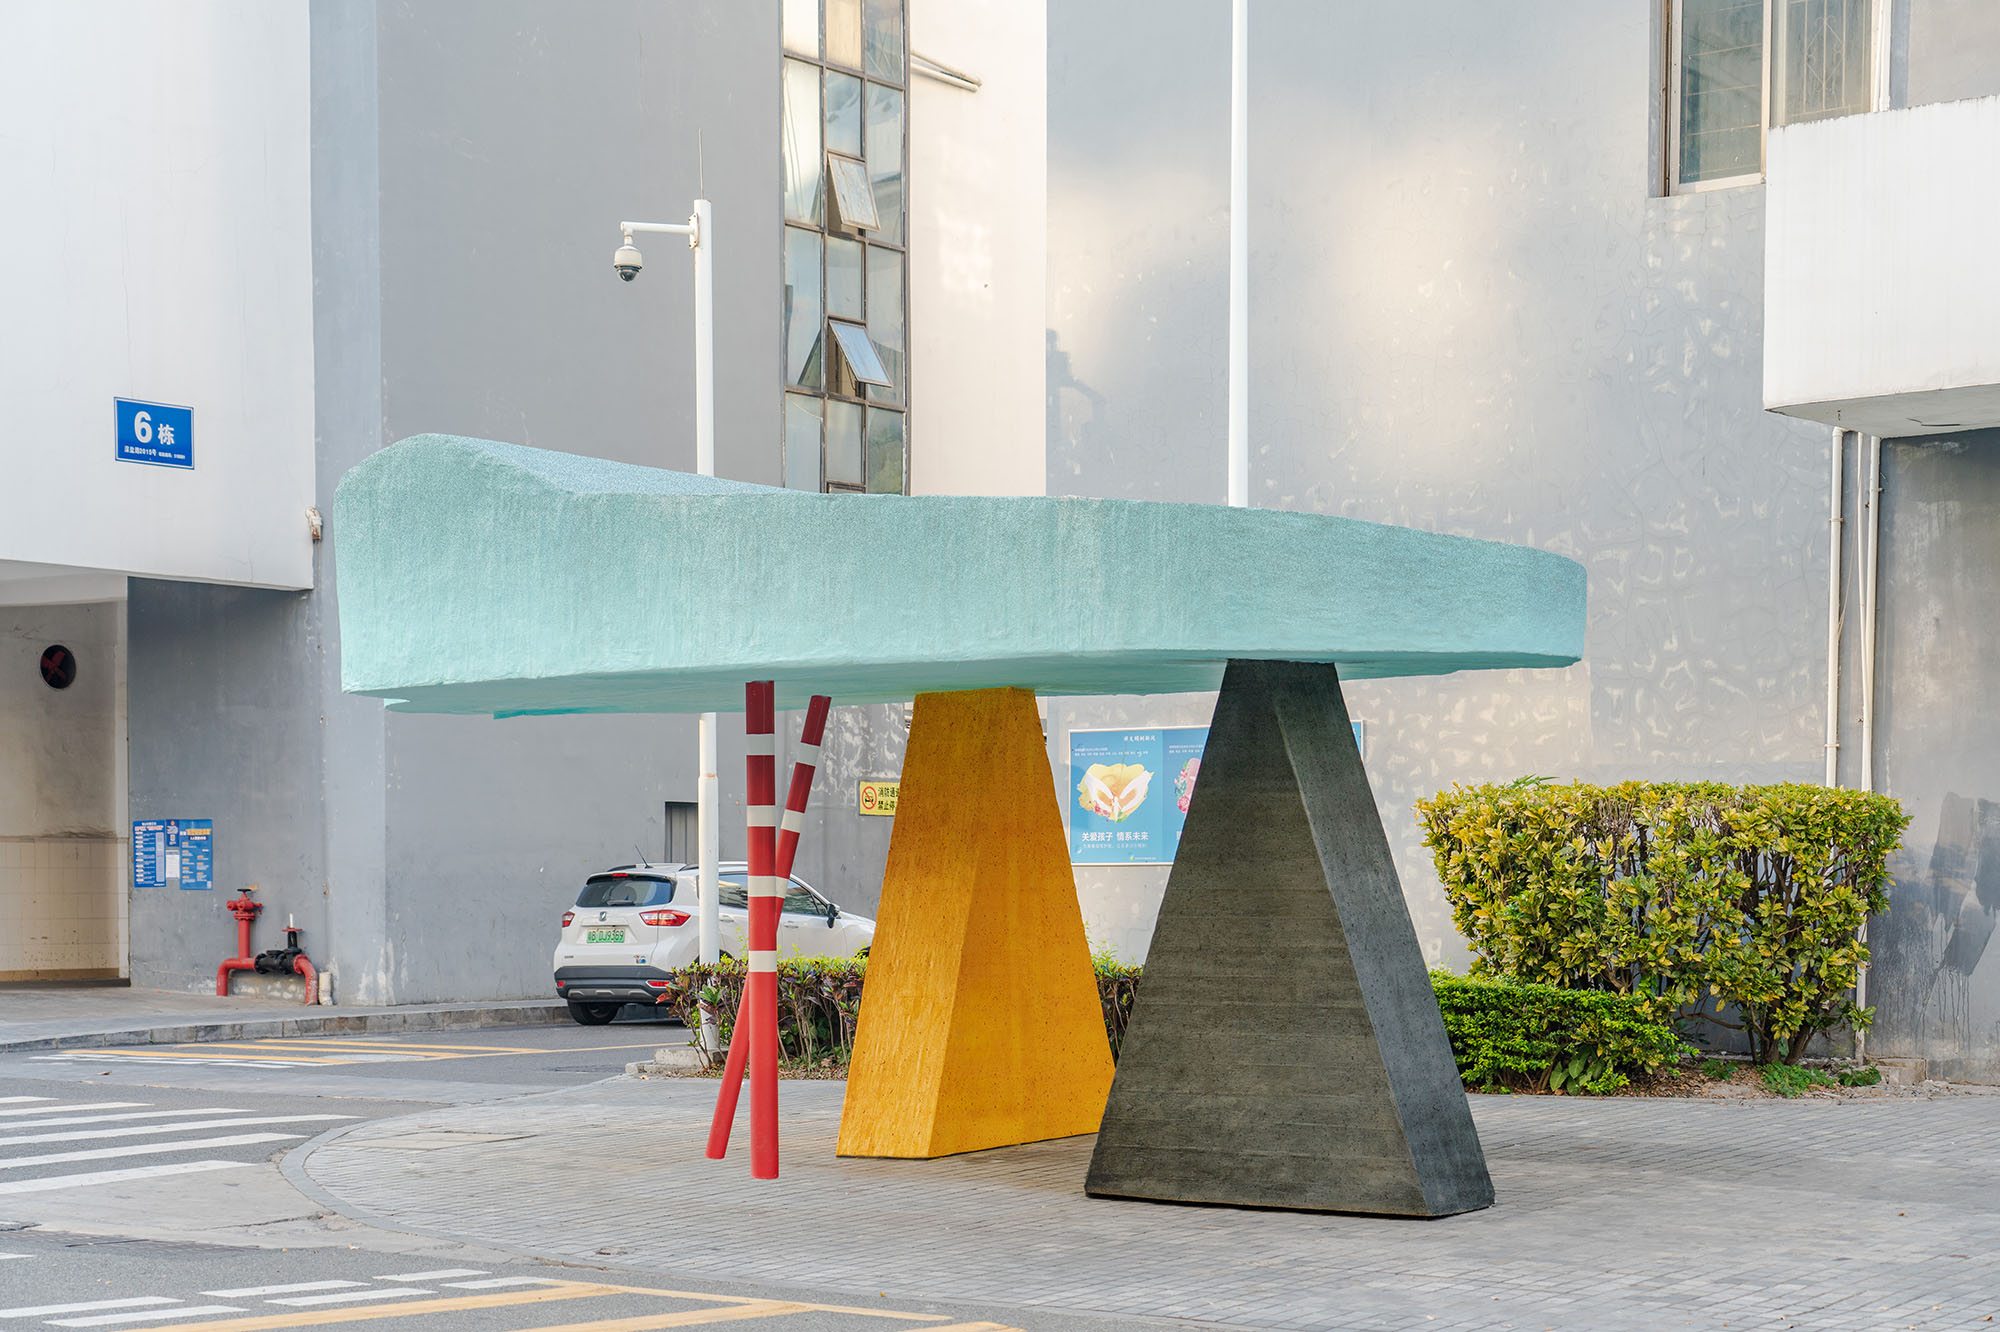 Object on a street corner, a triangular shelter designed by Sam Jacob Studio